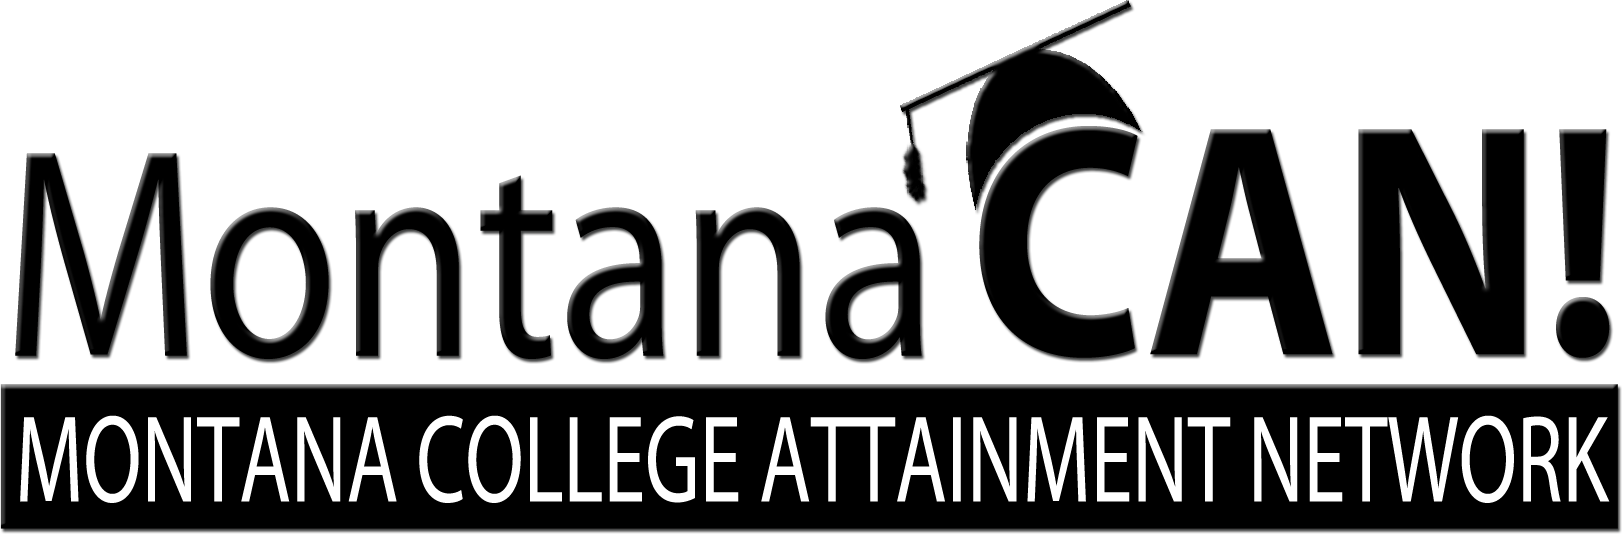 Montana College Attainment Network